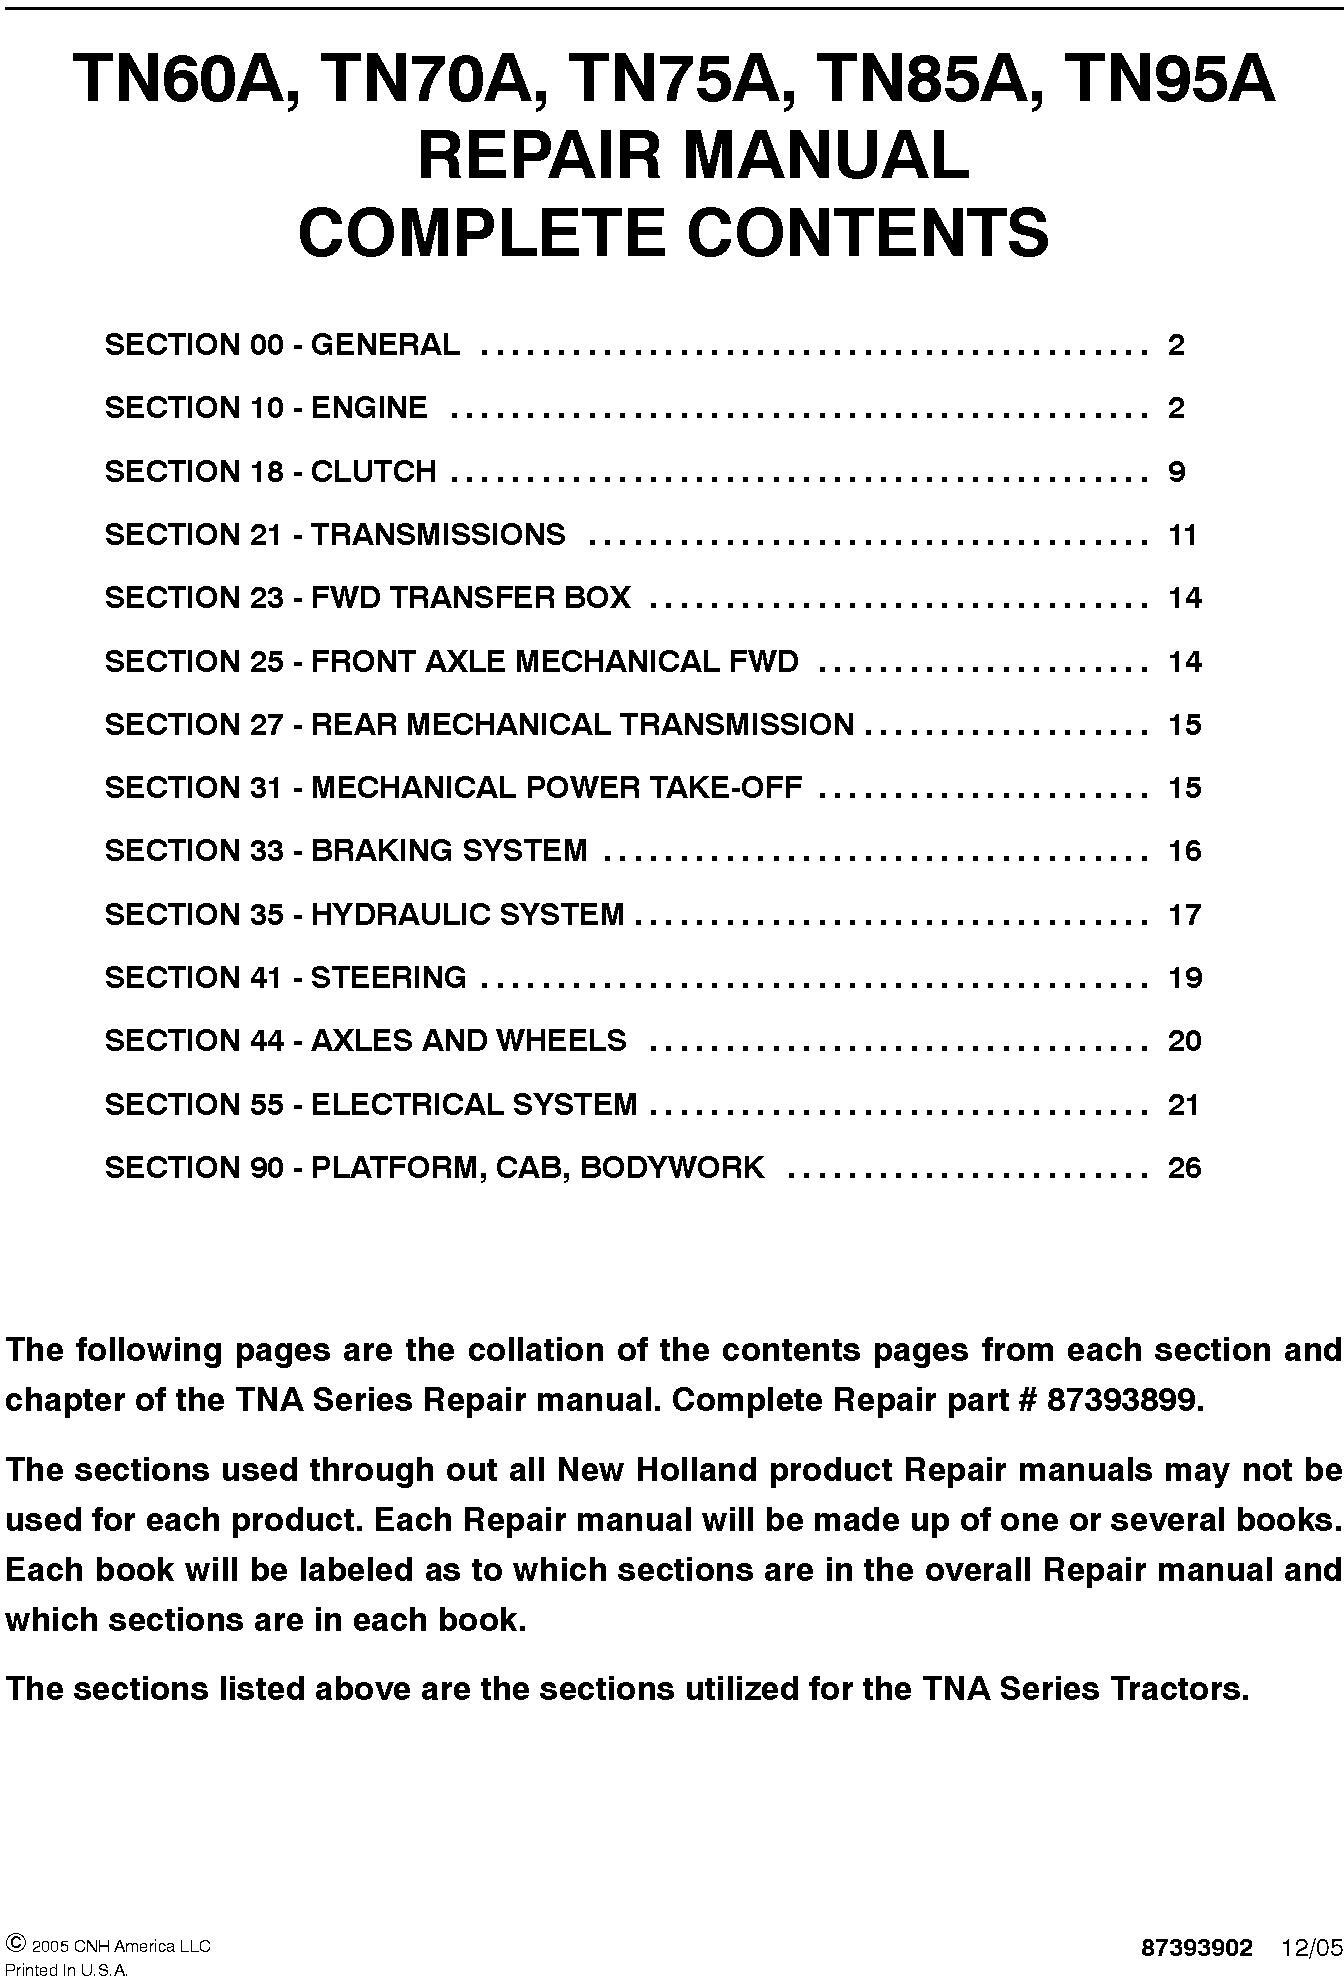 New Holland TN60A, TN70A, TN75A, TN85A, TN95A Tractors Complete Service Manual - 19615